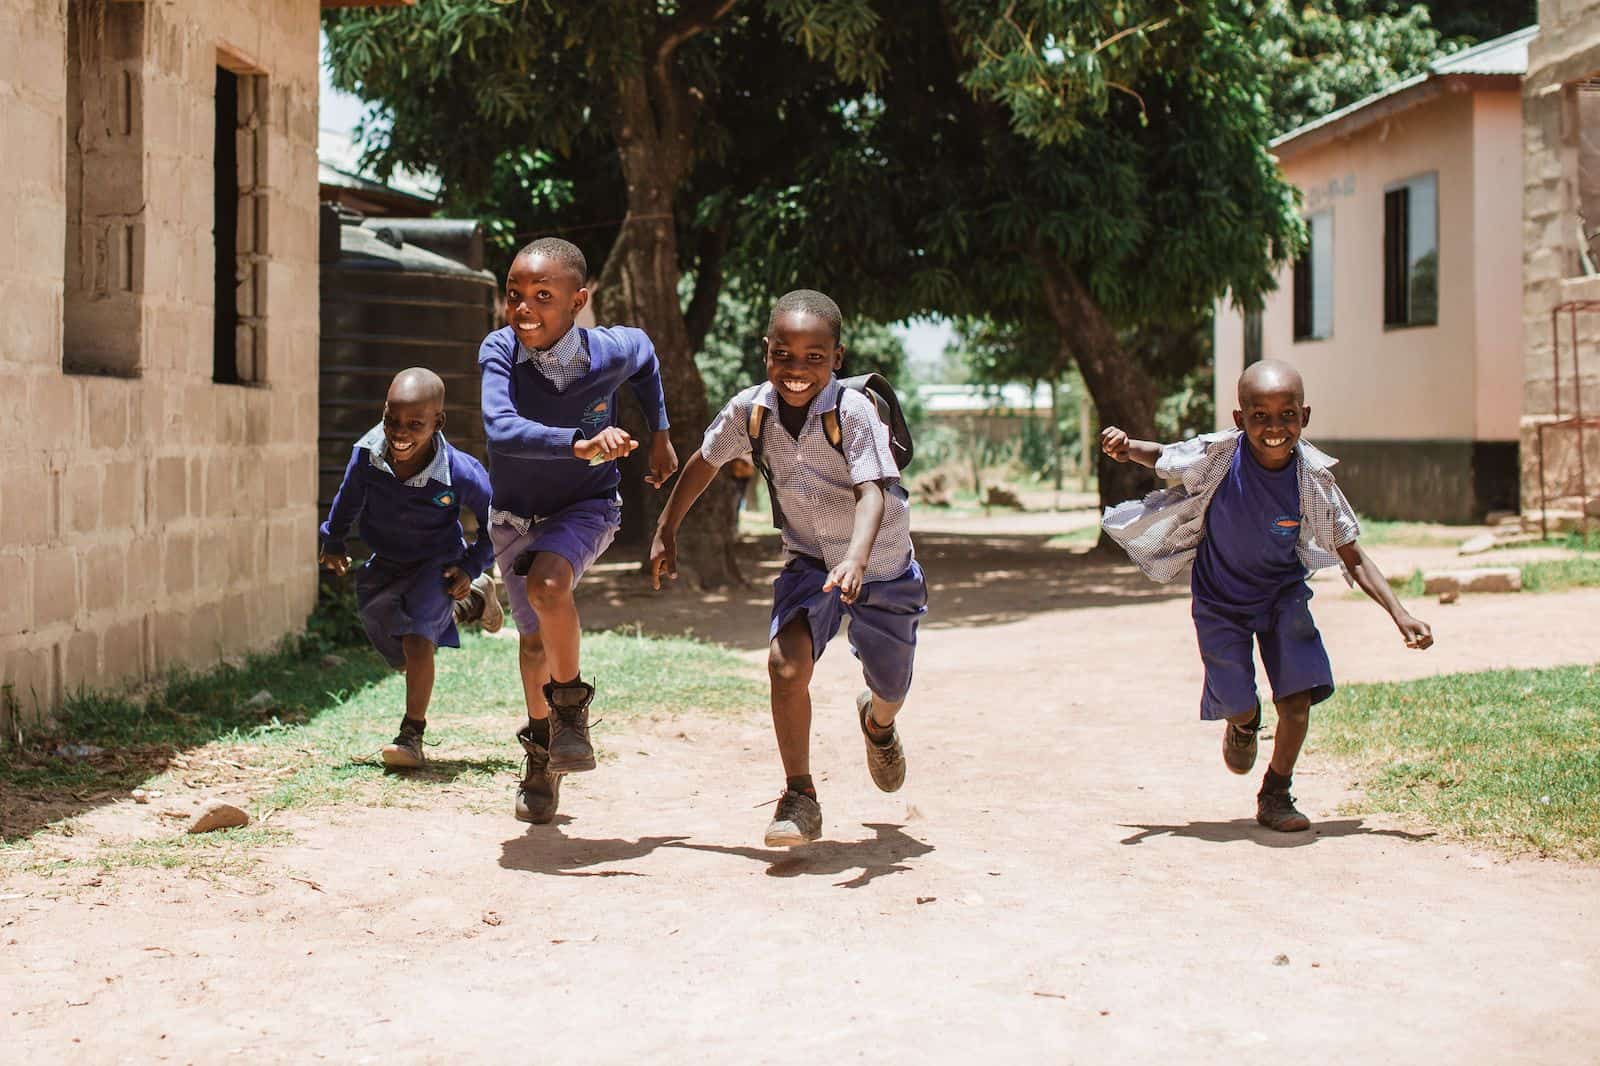 Four boys in Tanzania wearing purple school uniforms run towards the camera, smiling, down a dirt road.